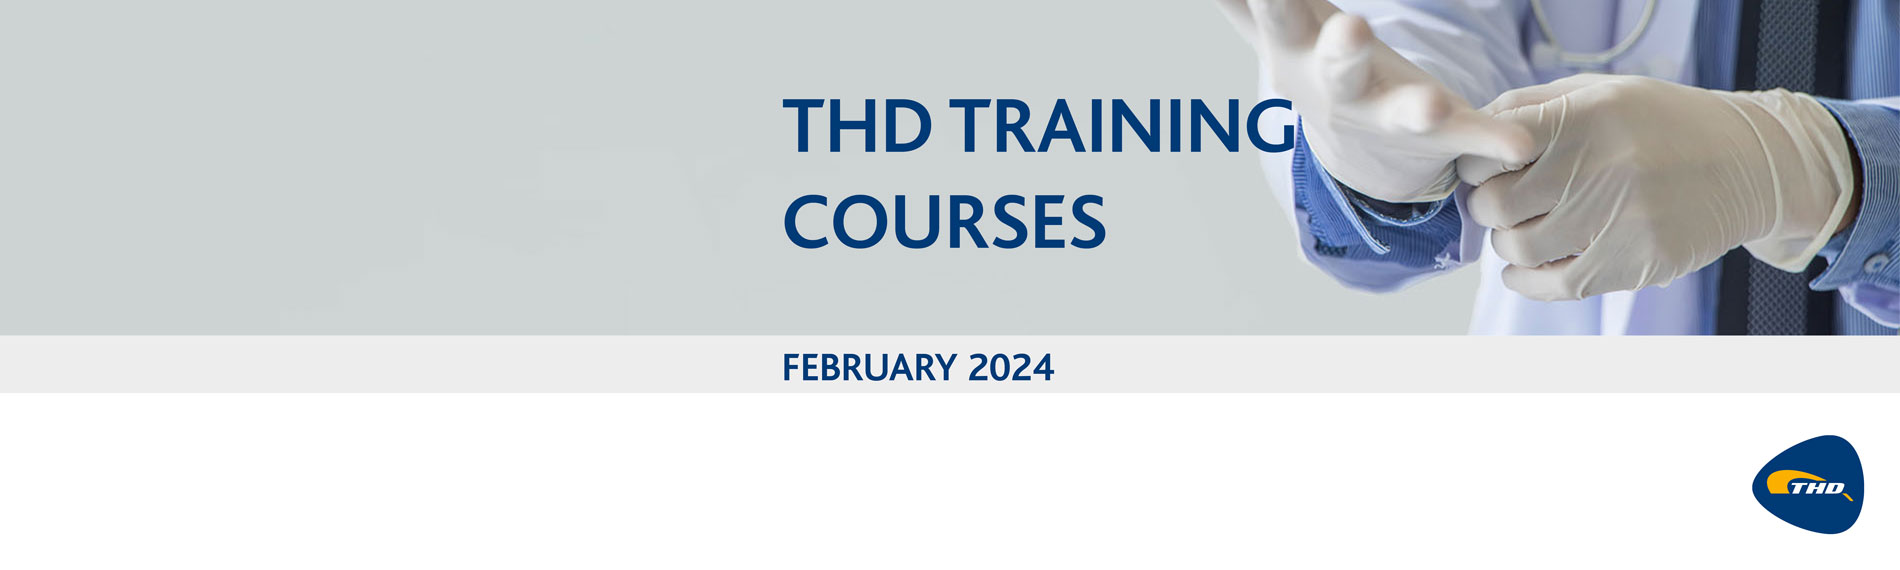 THD Webinars in February 2024